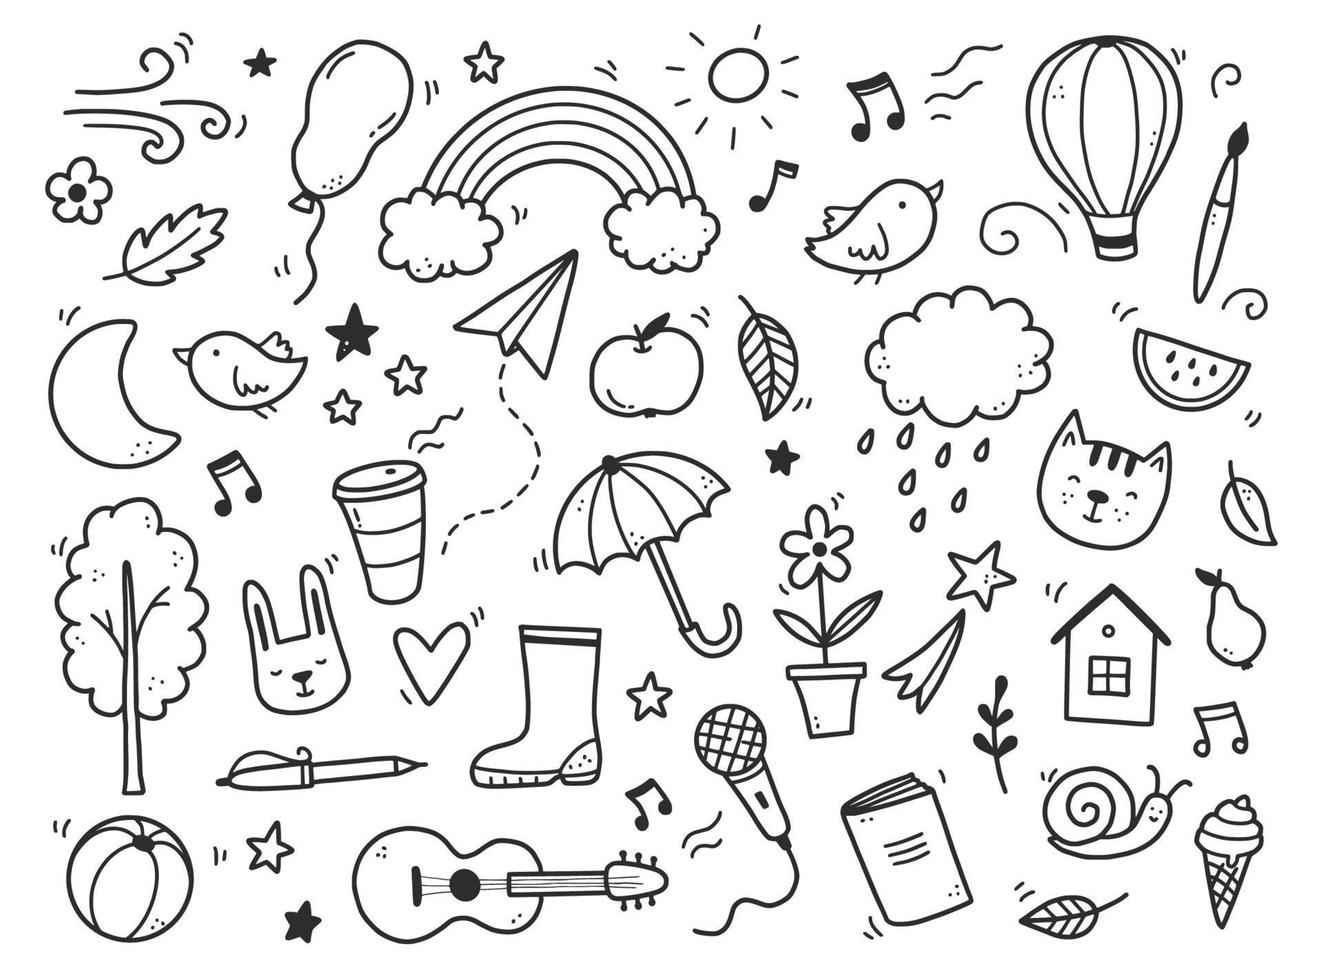 söt doodle med moln, regnbåge, sol, djur vektor